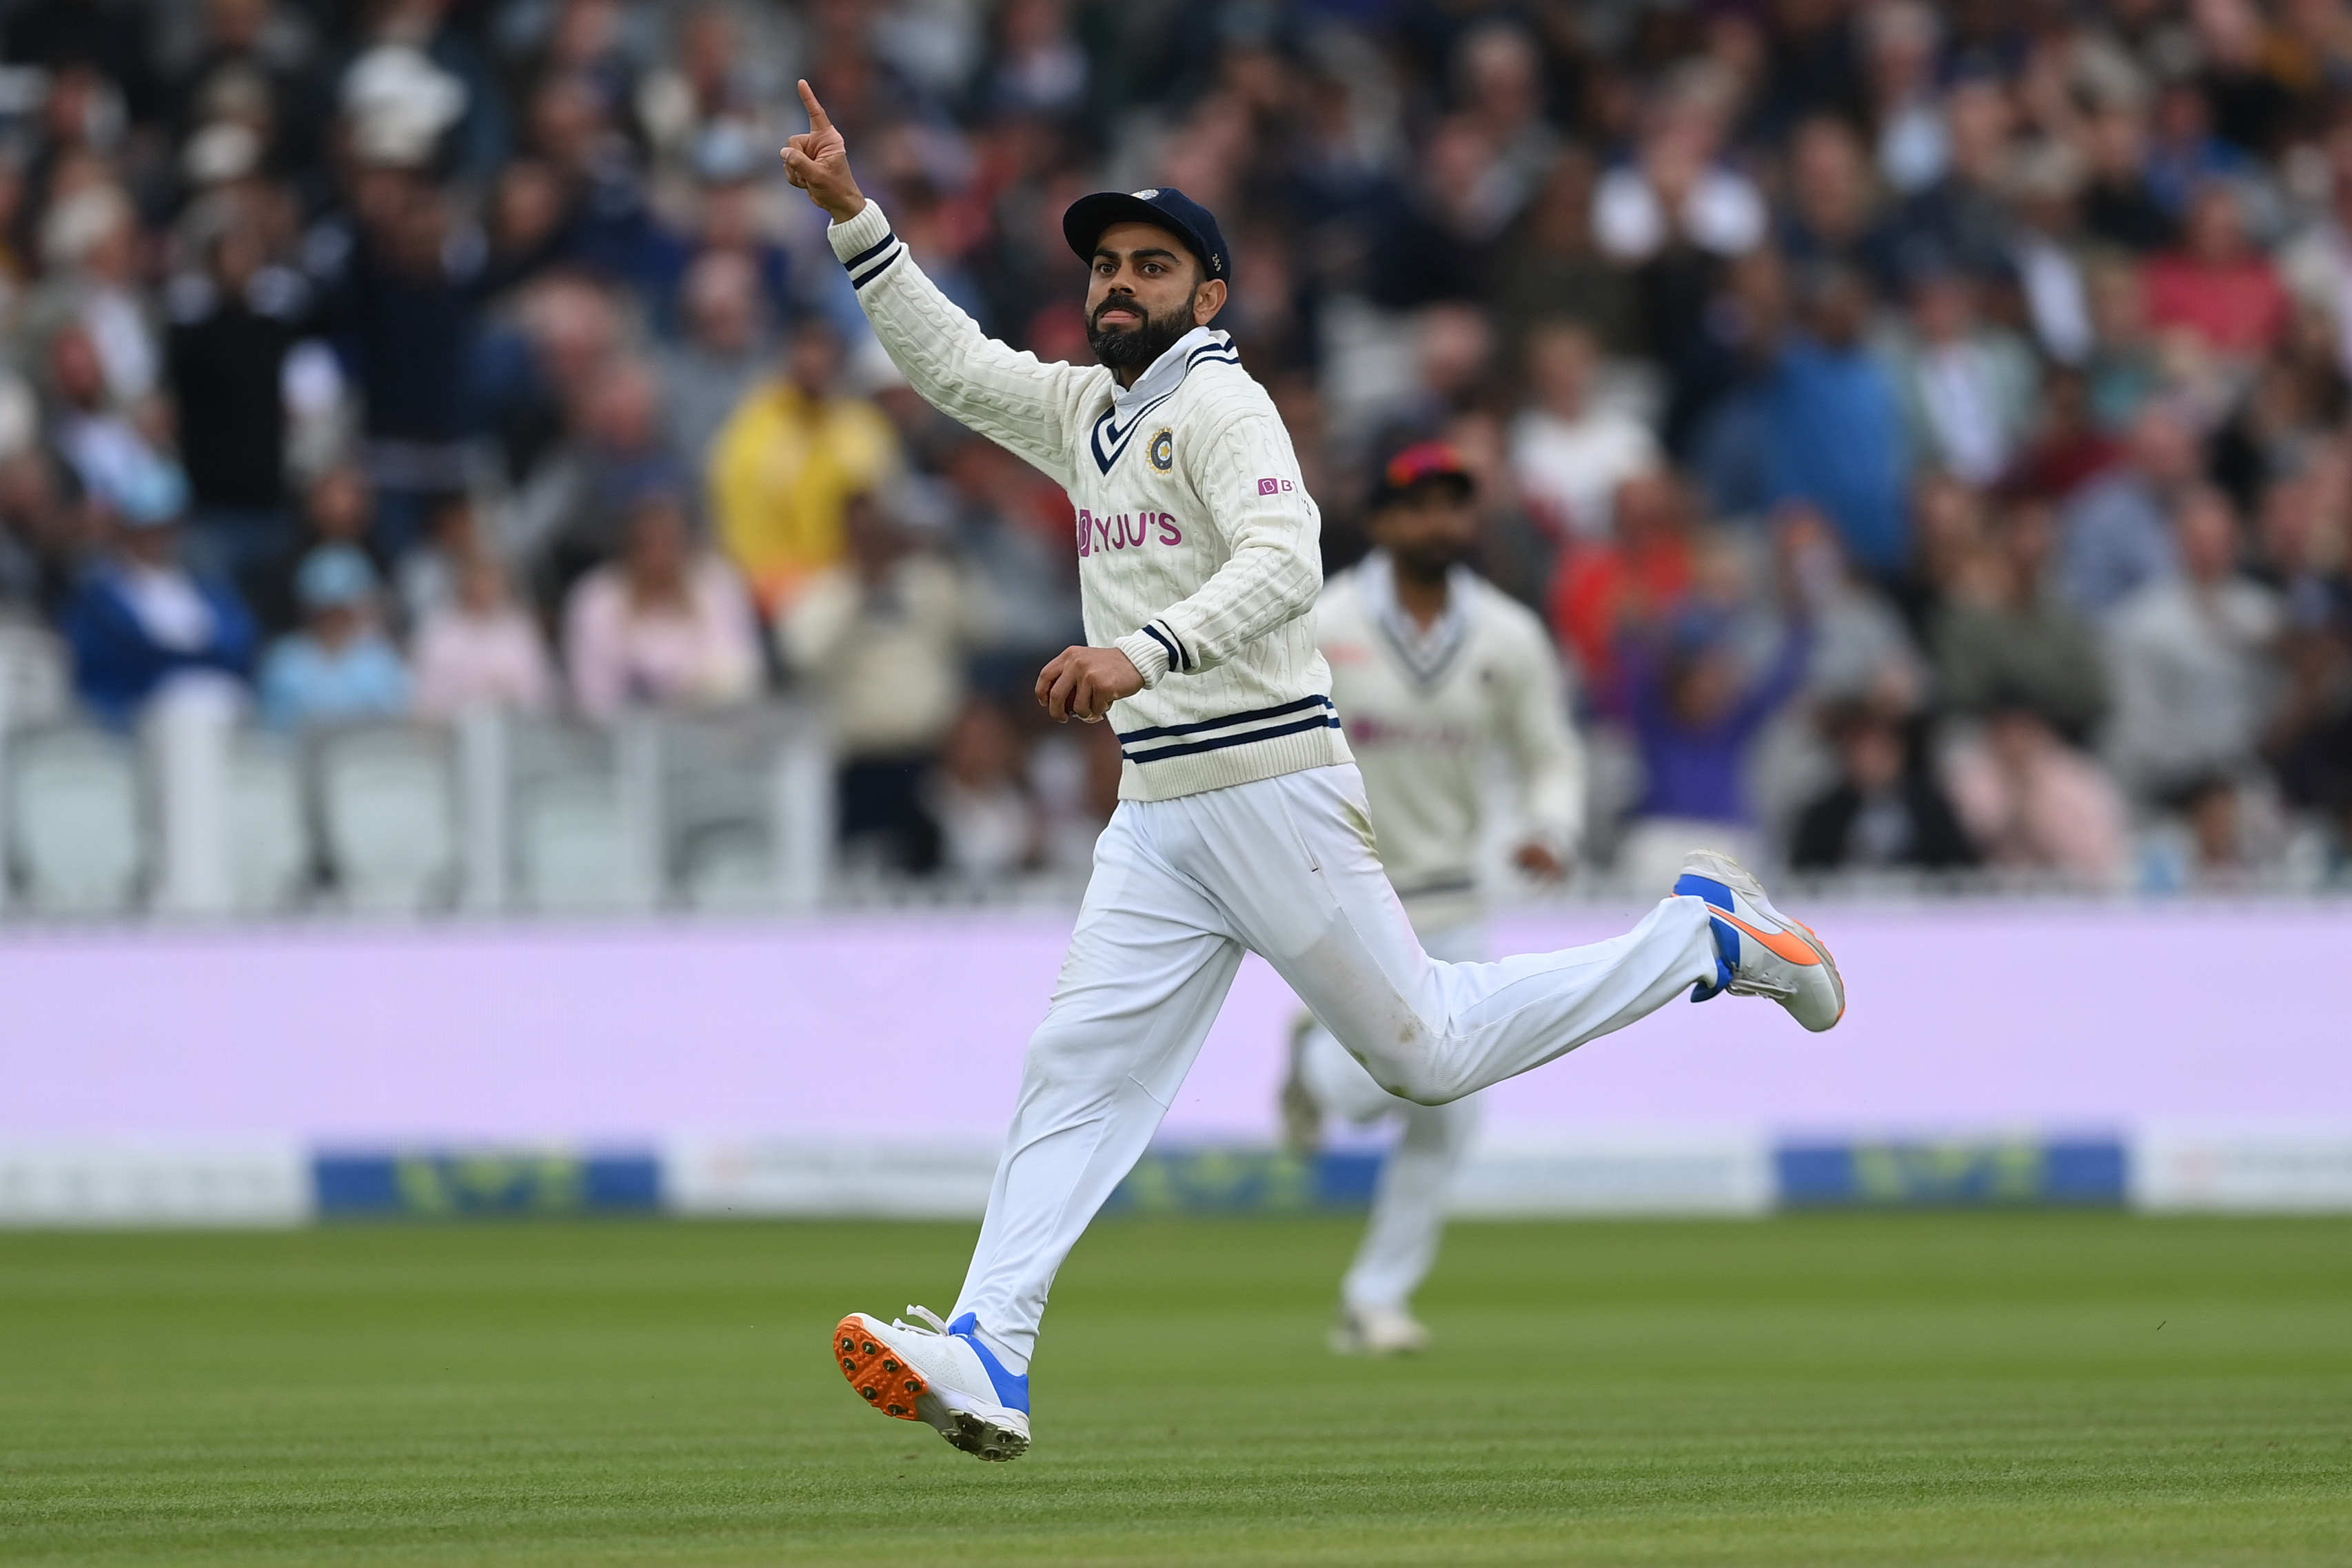 ENG vs IND | Virat Kohli passed the captaincy Test with flying colors, remarks Nasser Hussain